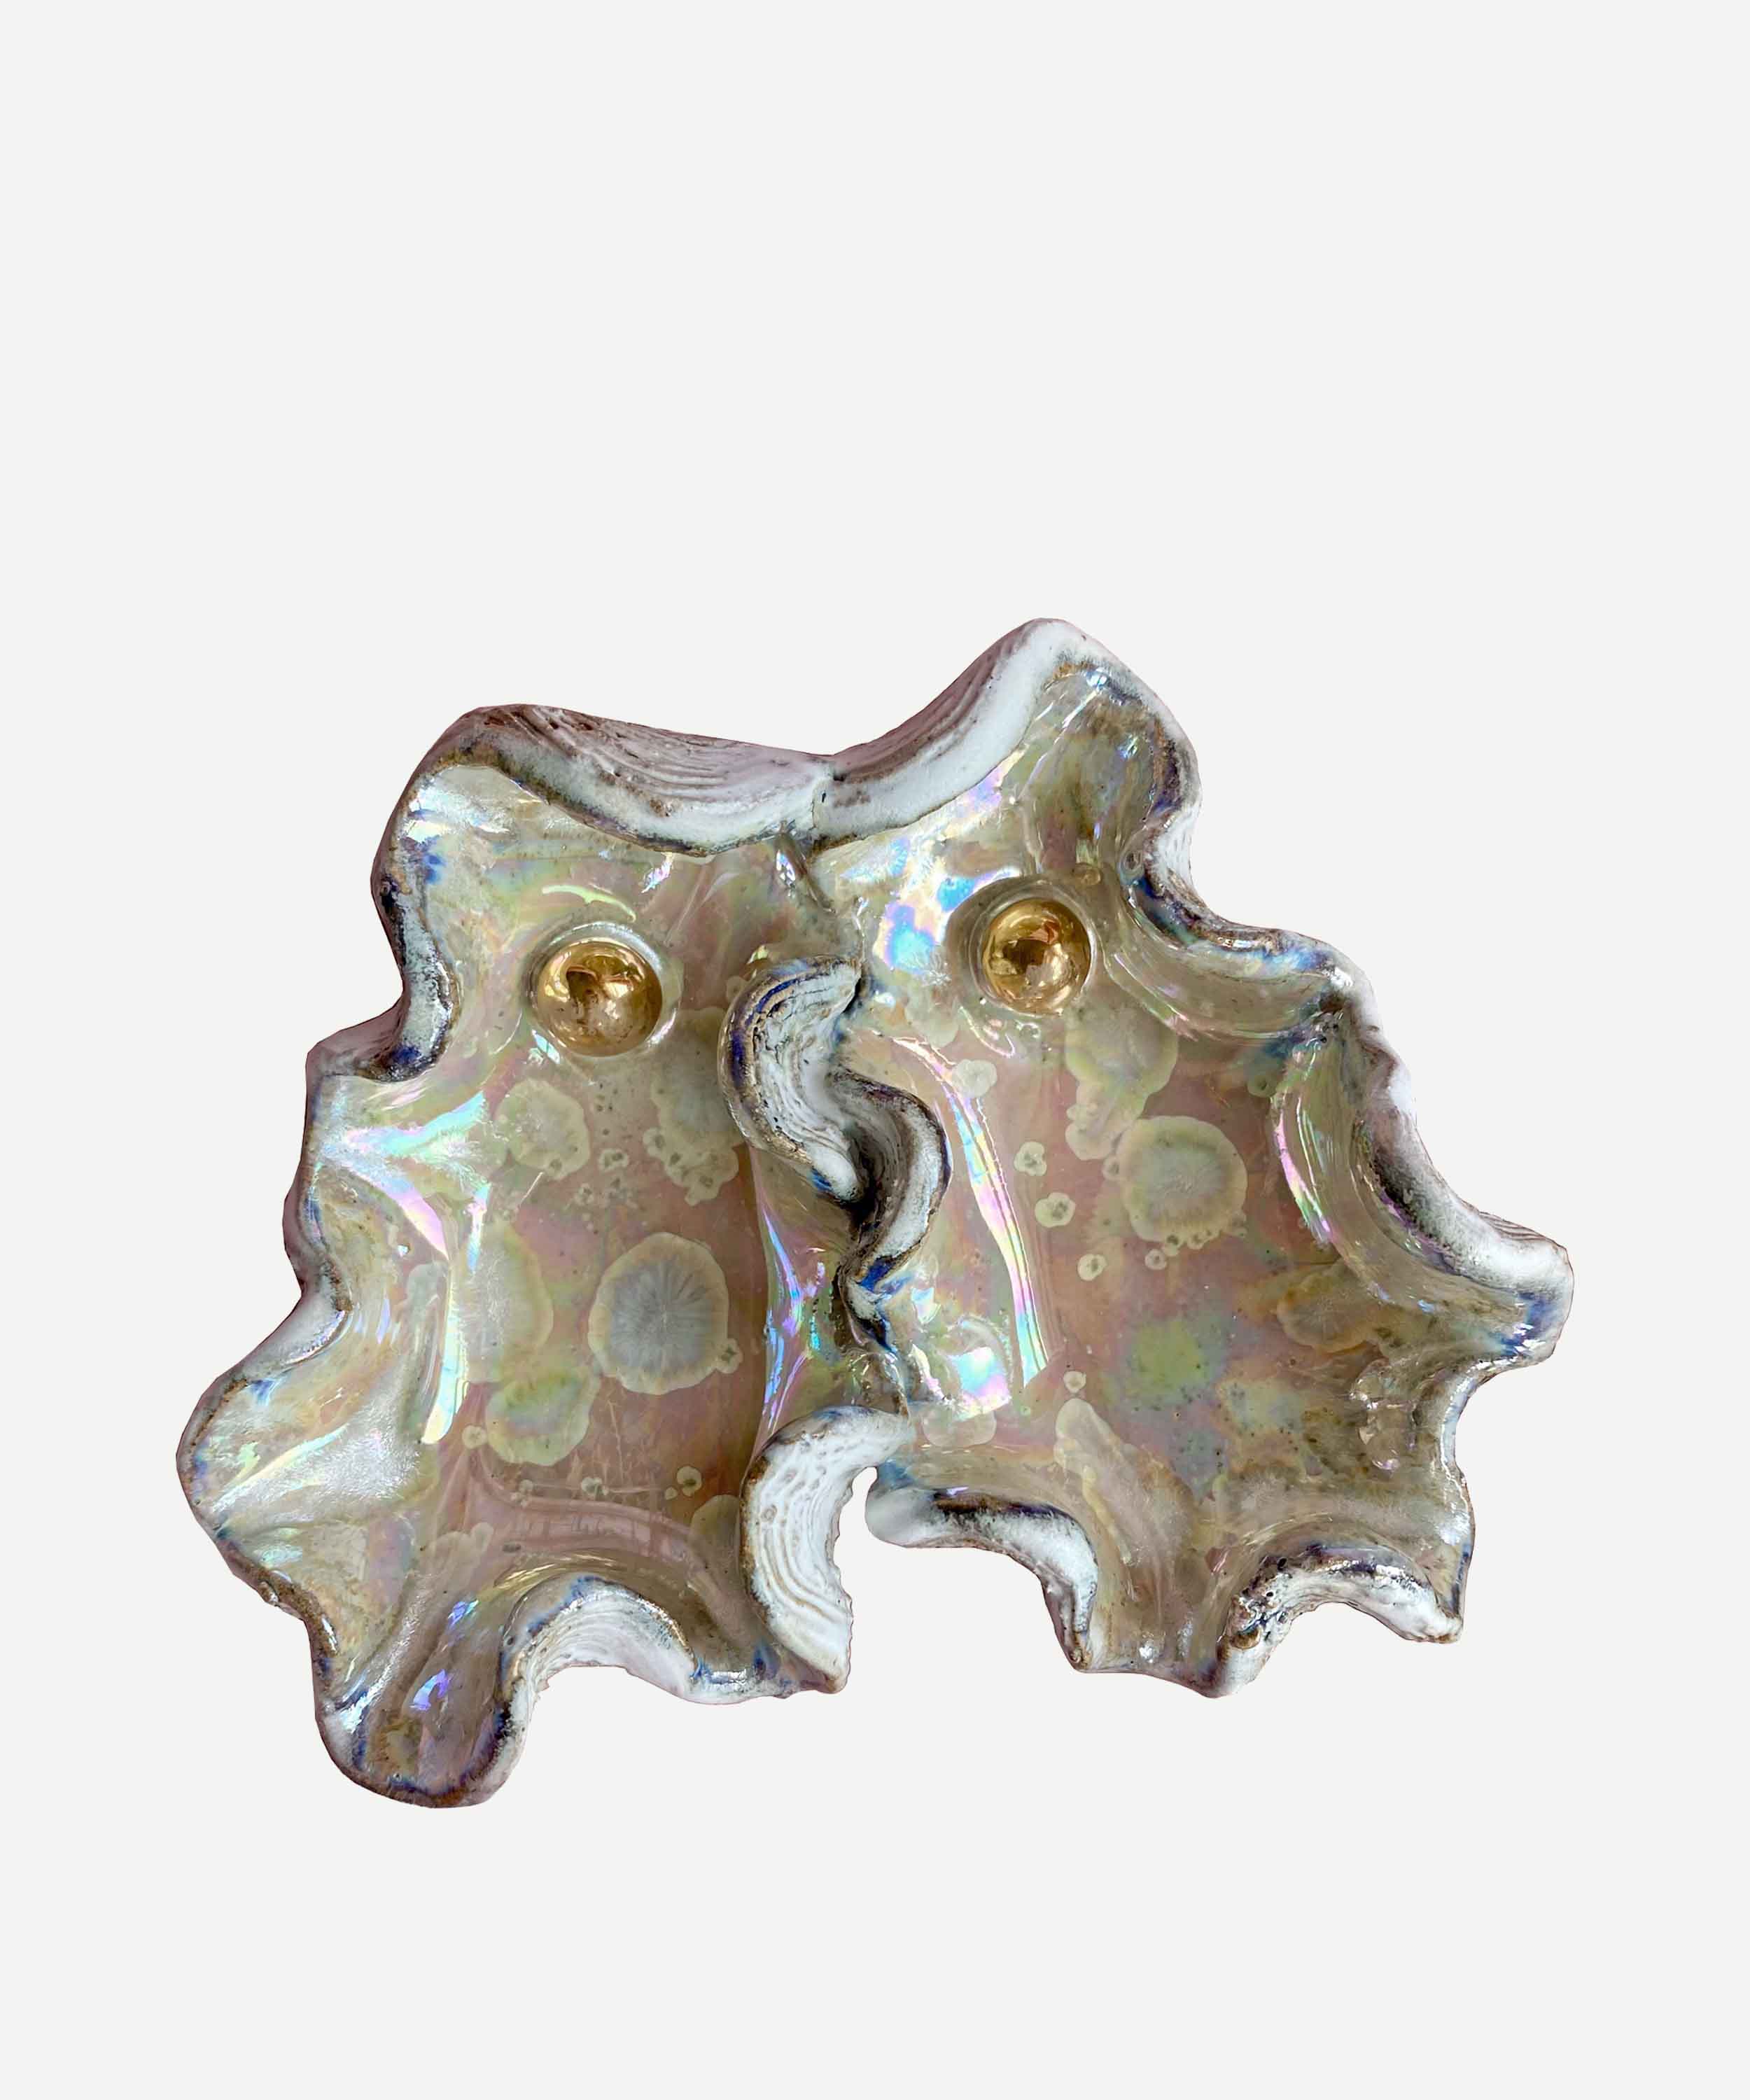 Ceramic Oyster Shell Pinch Pot - $42